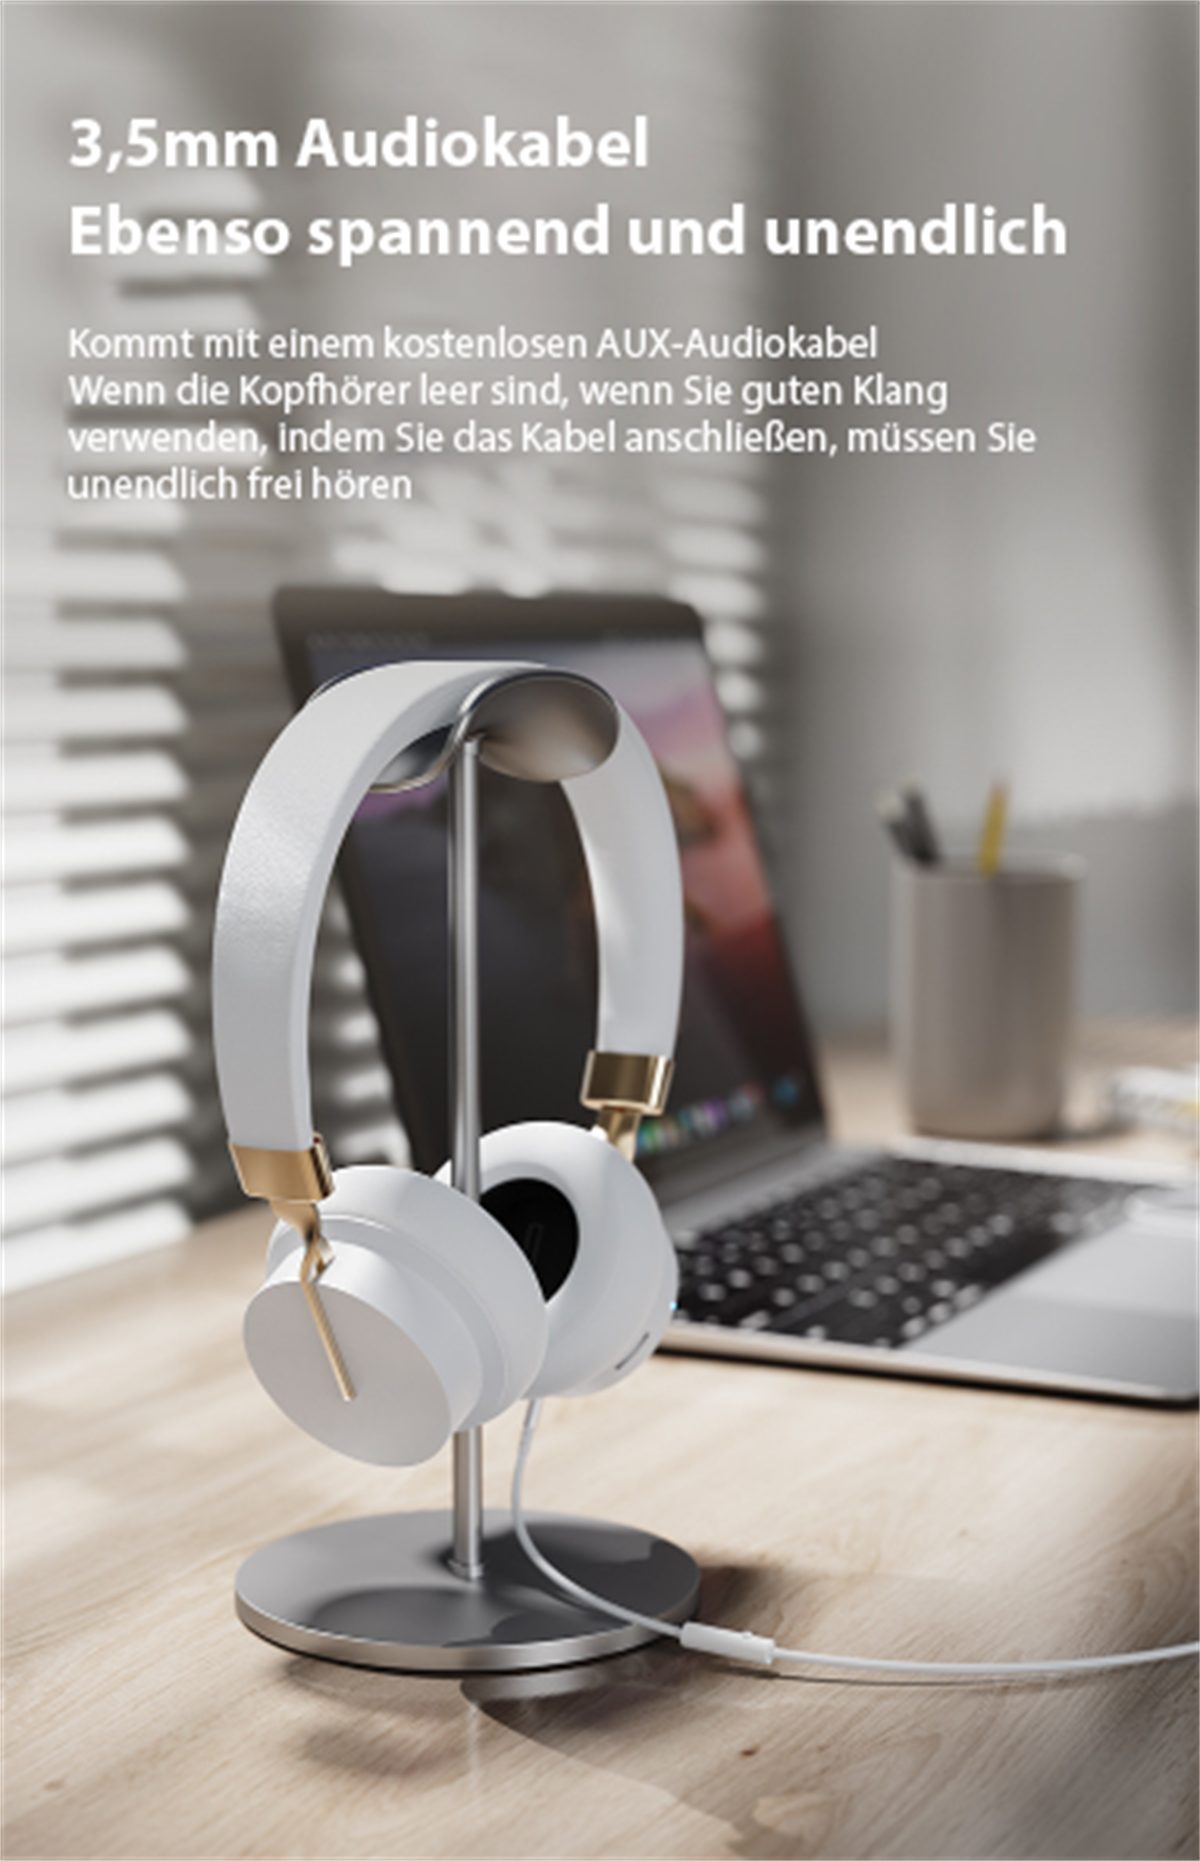 carefully Akkulaufzeit Bluetooth-Headset, lange Weiß Over-Ear-Kopfhörer Headset, Kabelloses 50 selected Stunden